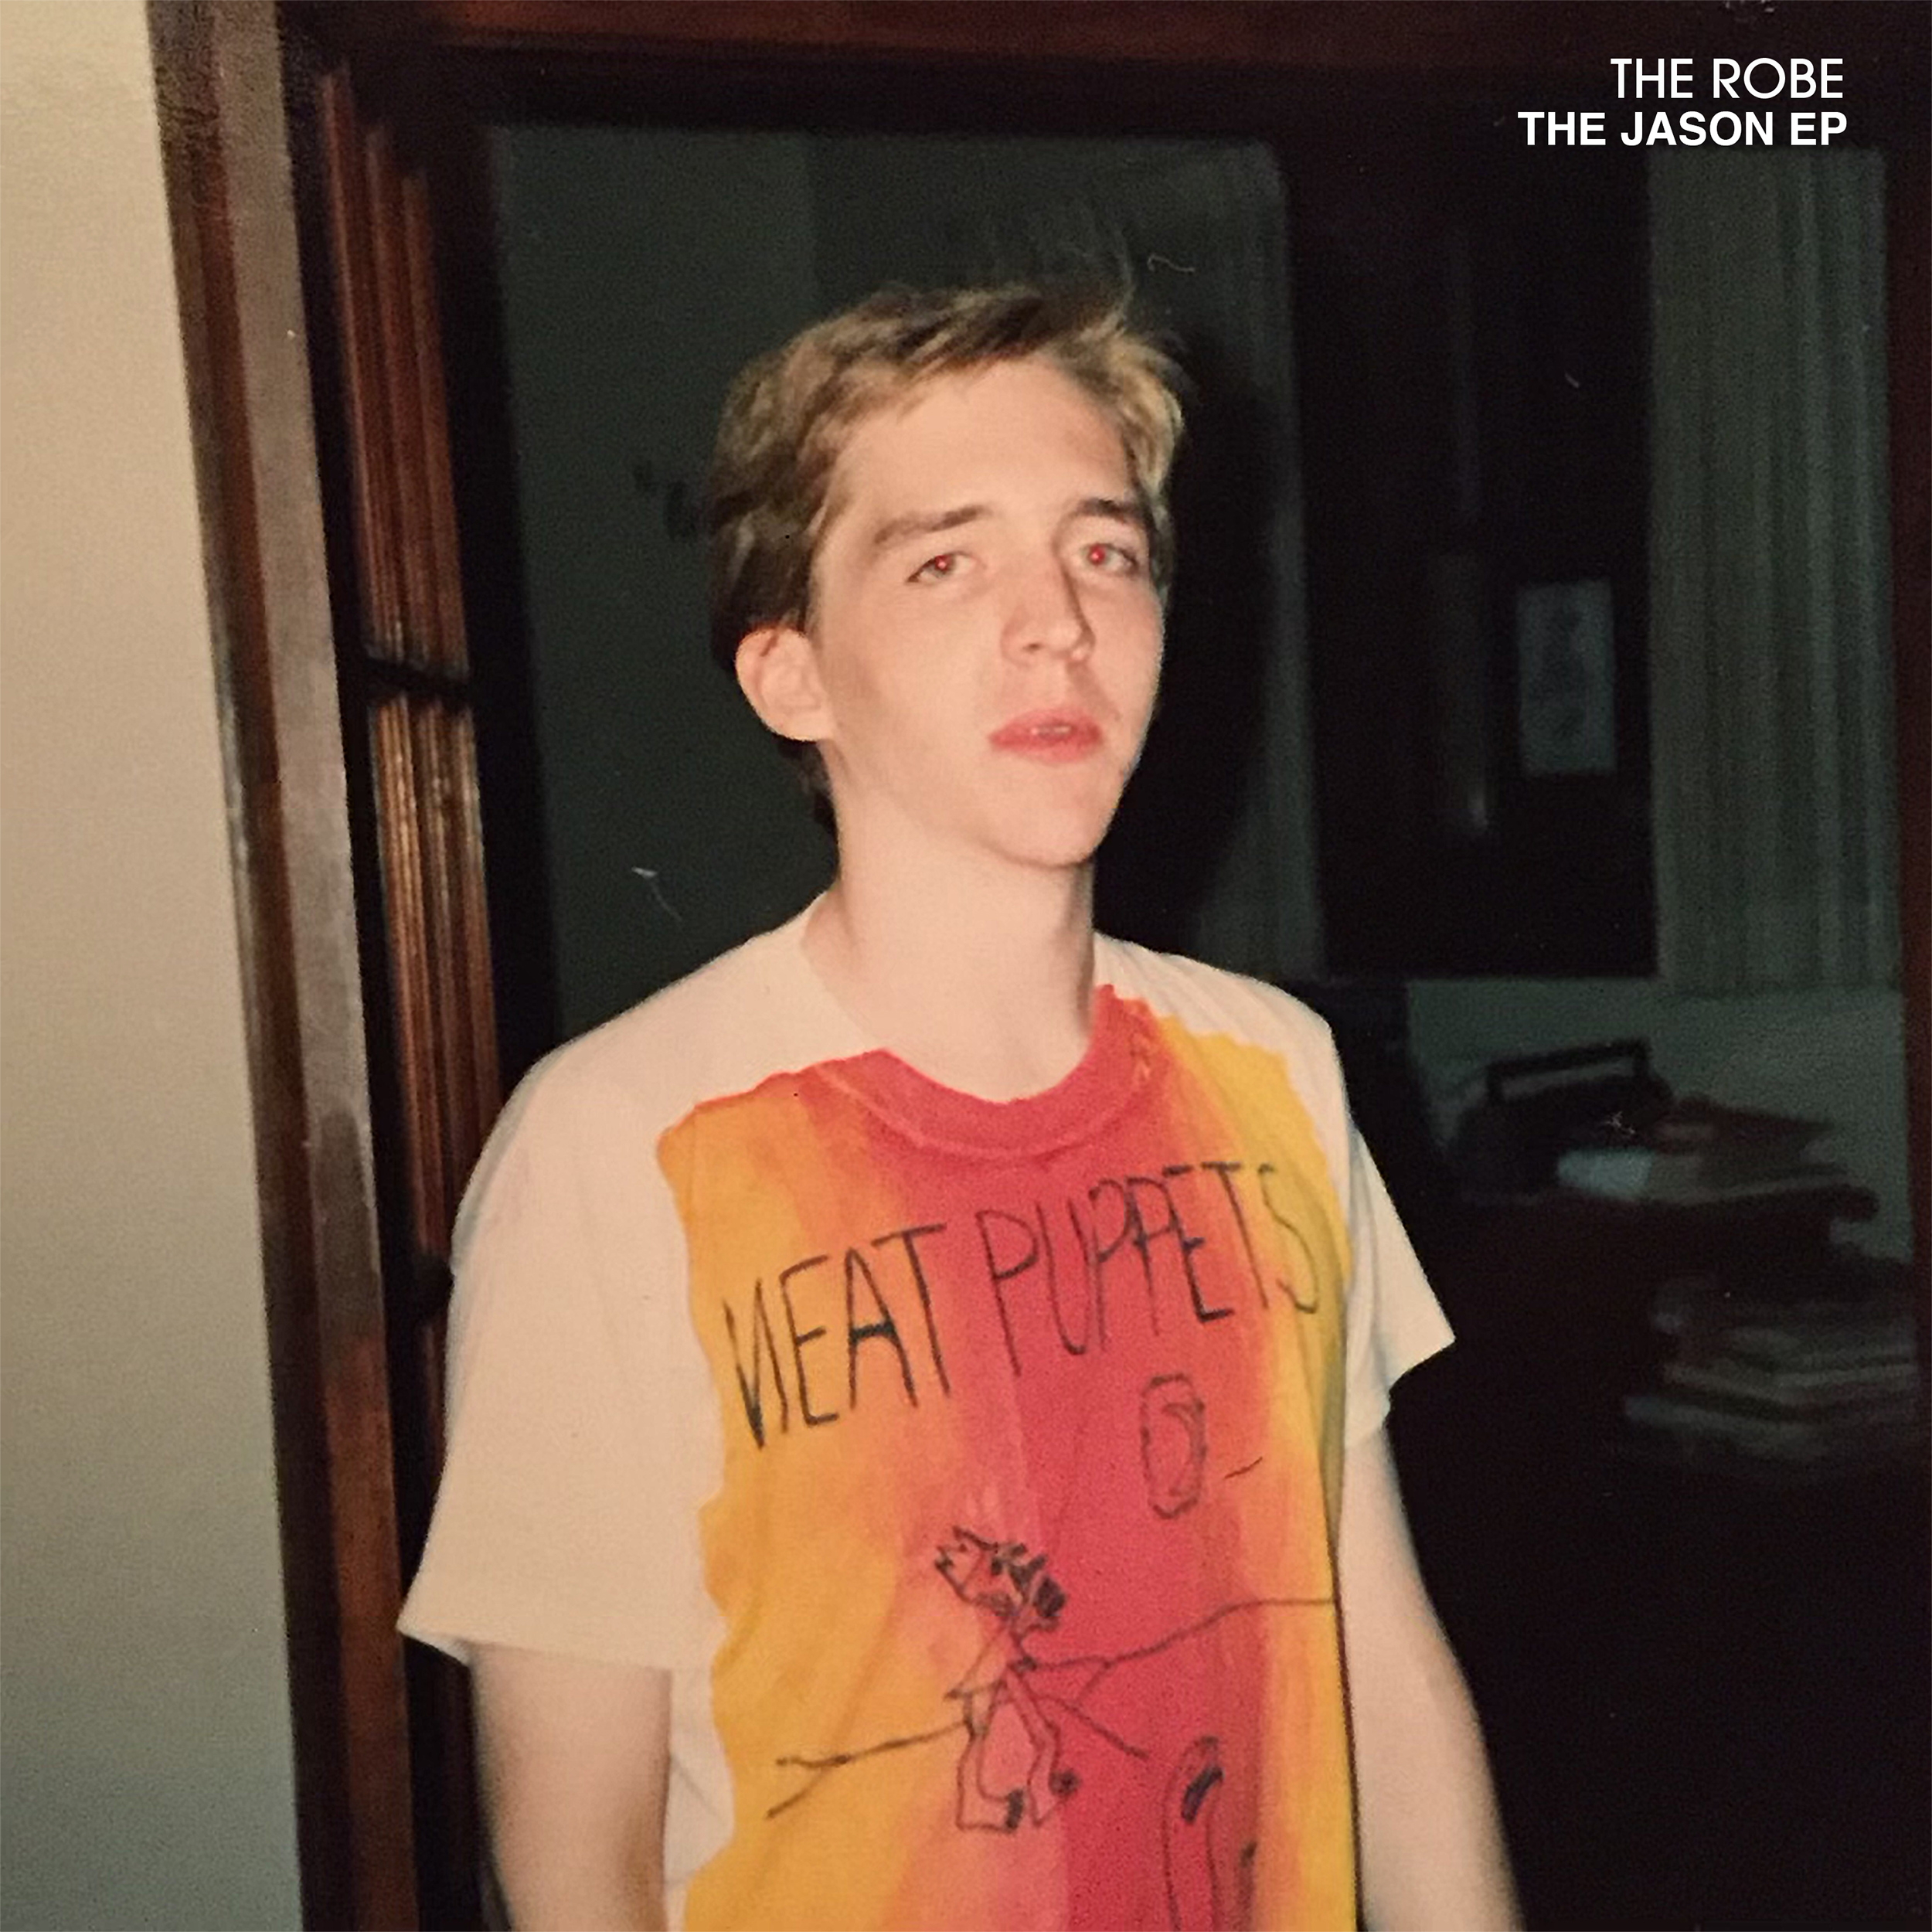 The Robe - The Jason EP